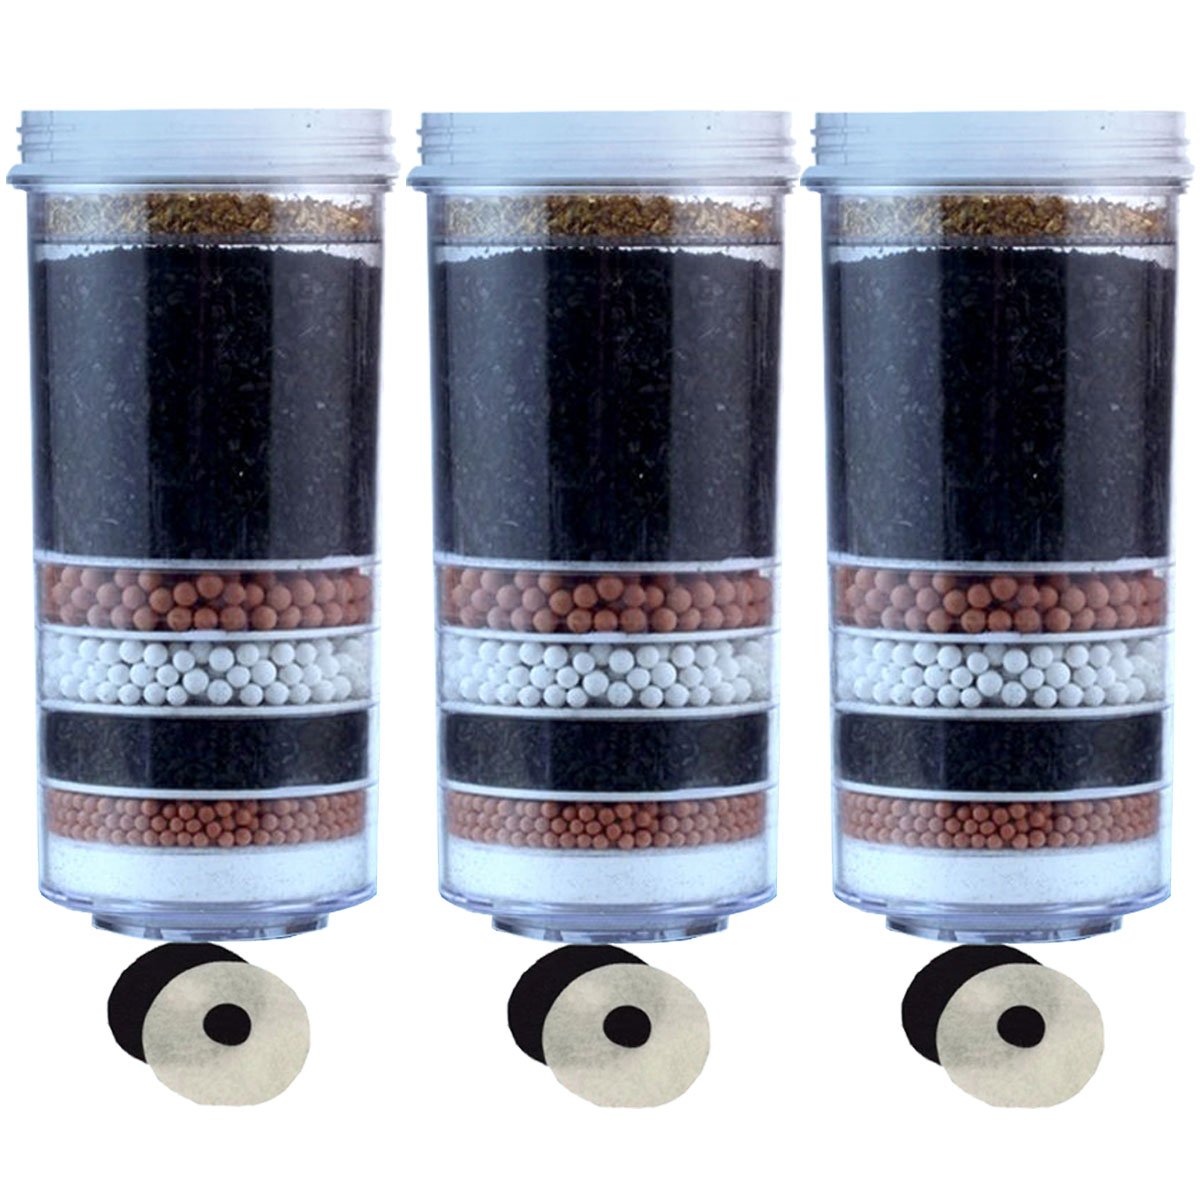 Aimex 8 Stage Water Filter Replacement Cartridge - 3pck - Mari Australia